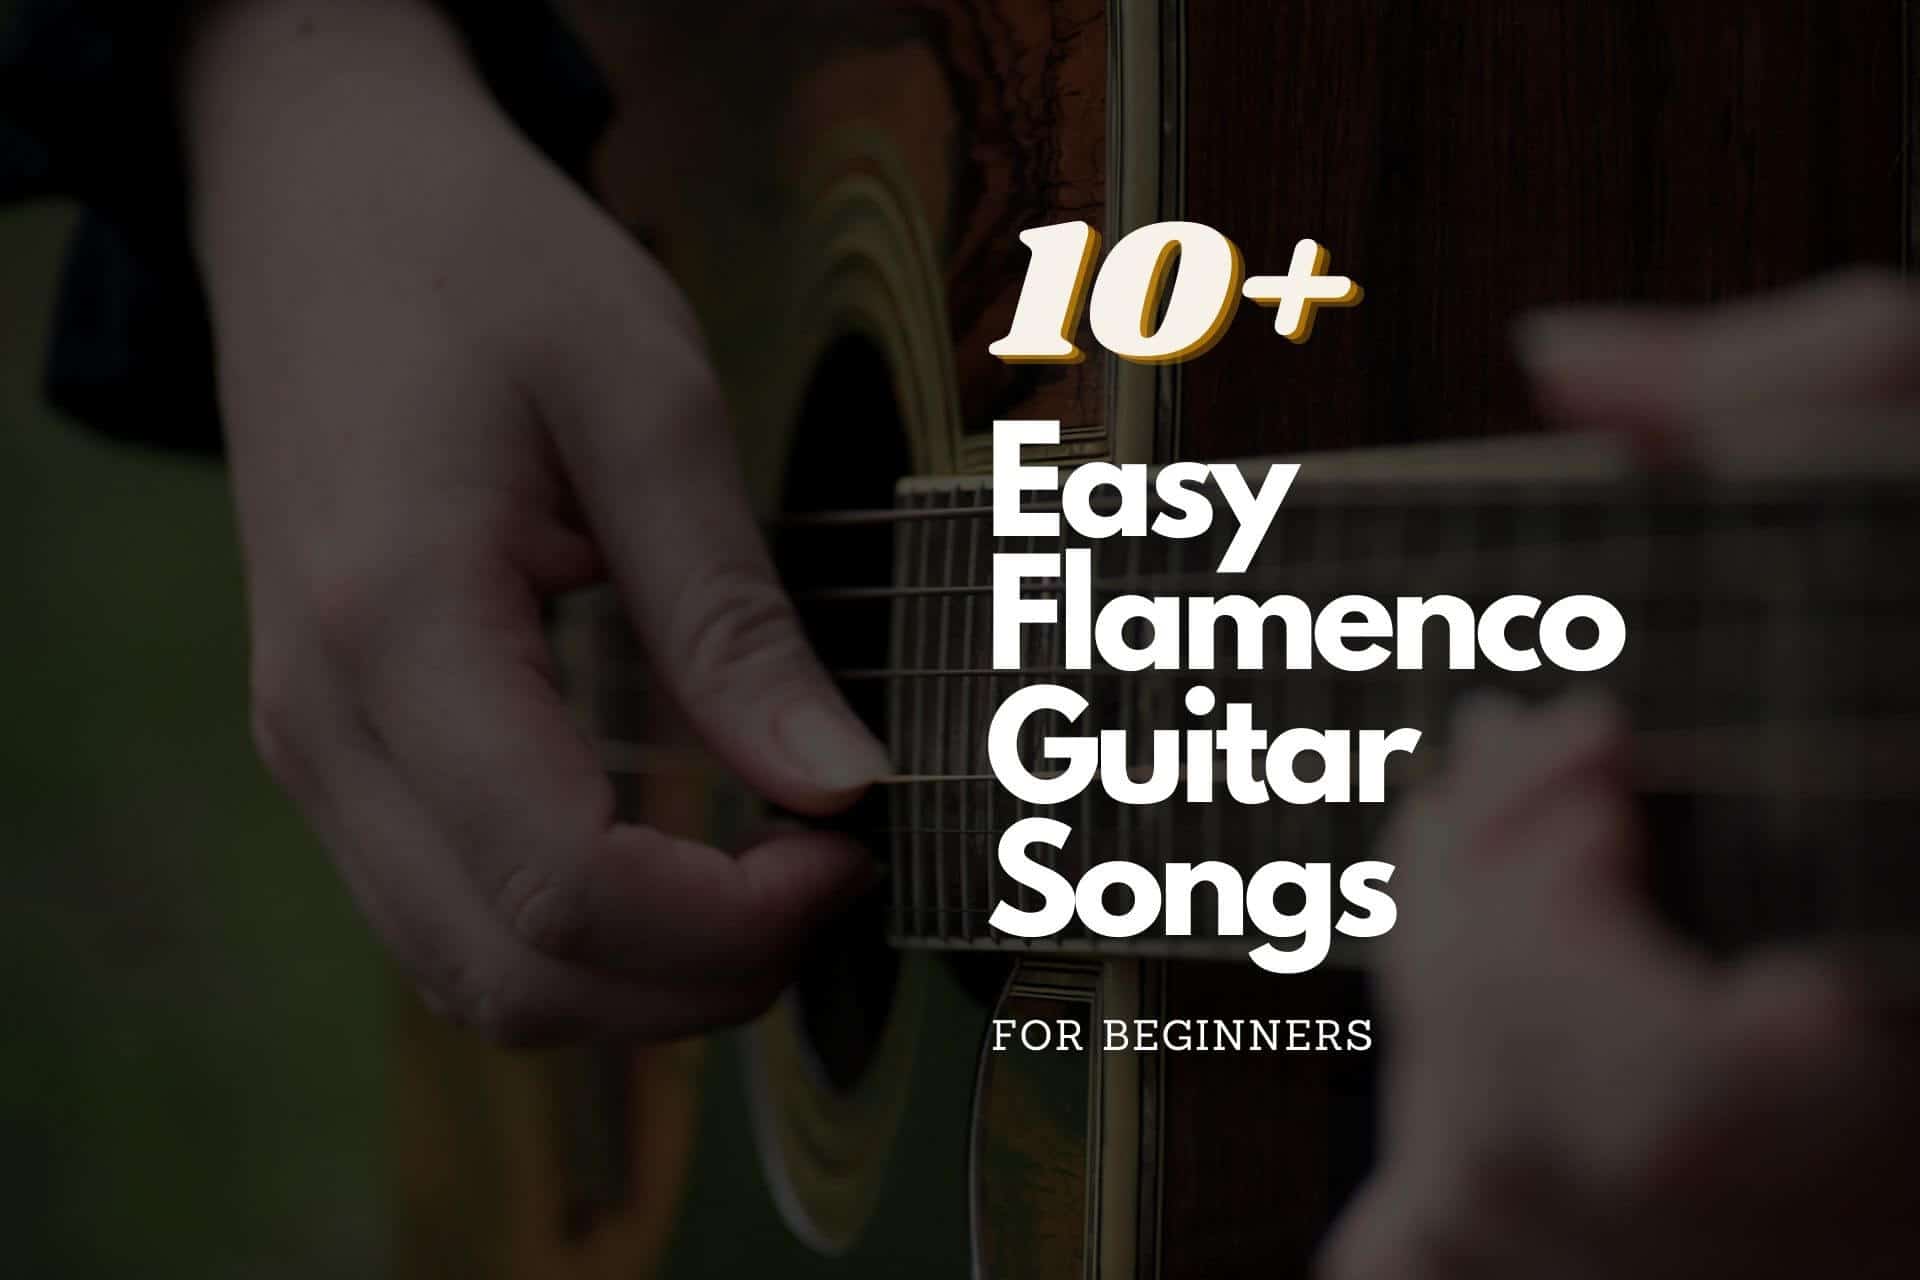 Easy Flamenco Guitar Songs